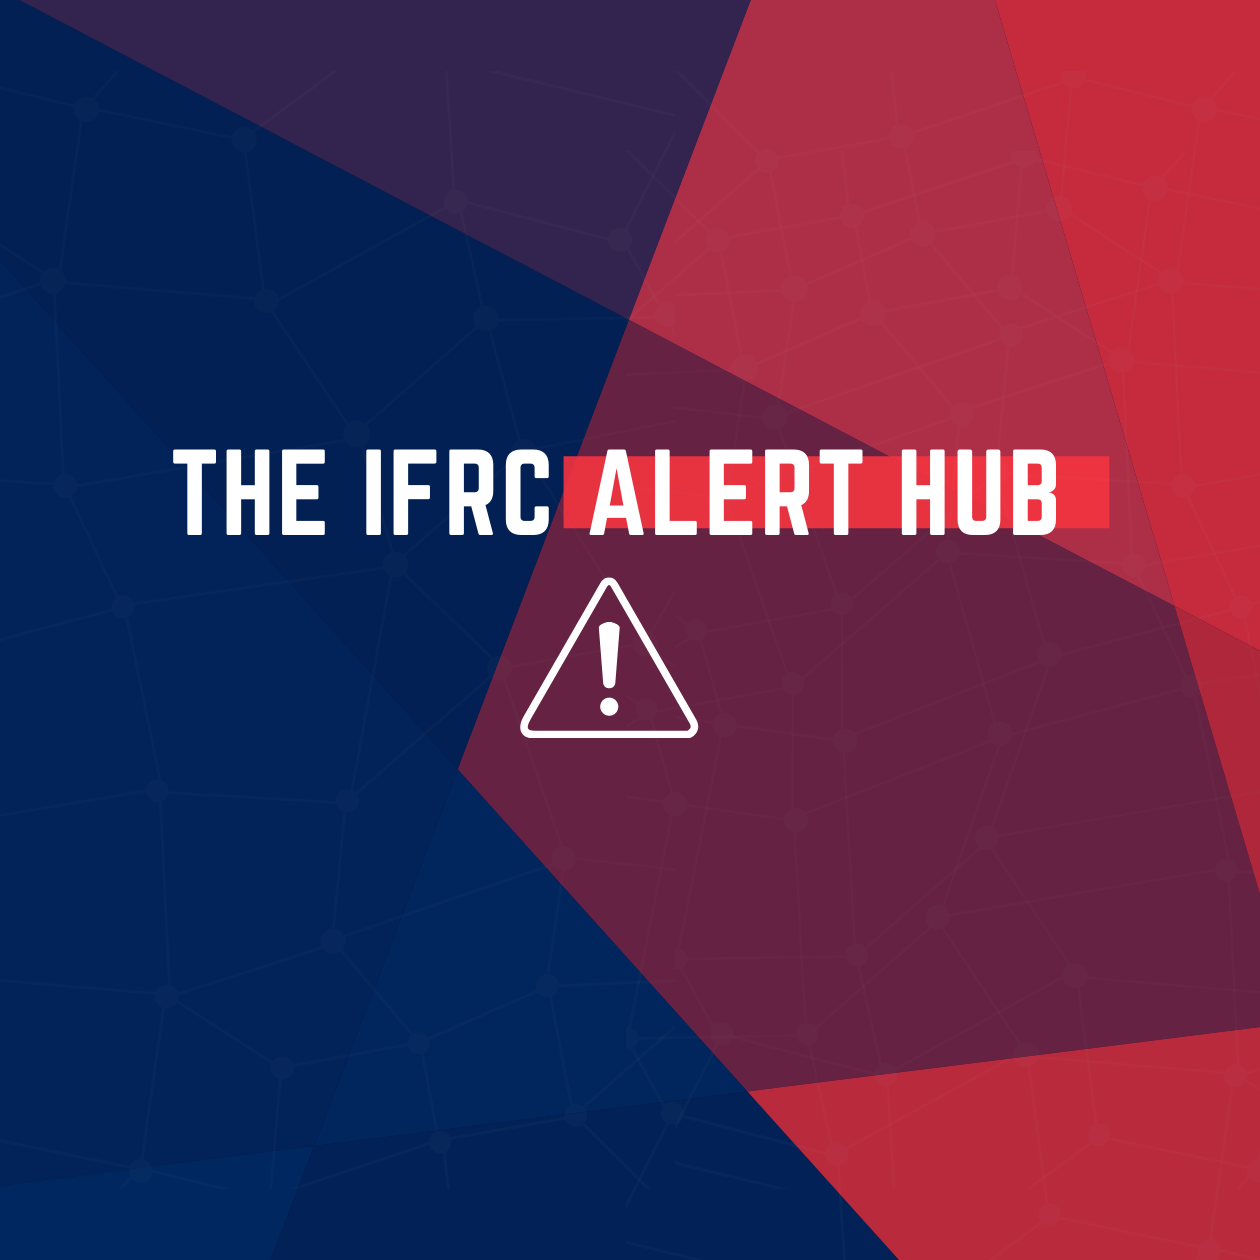 IFRC Alert Hub (13)